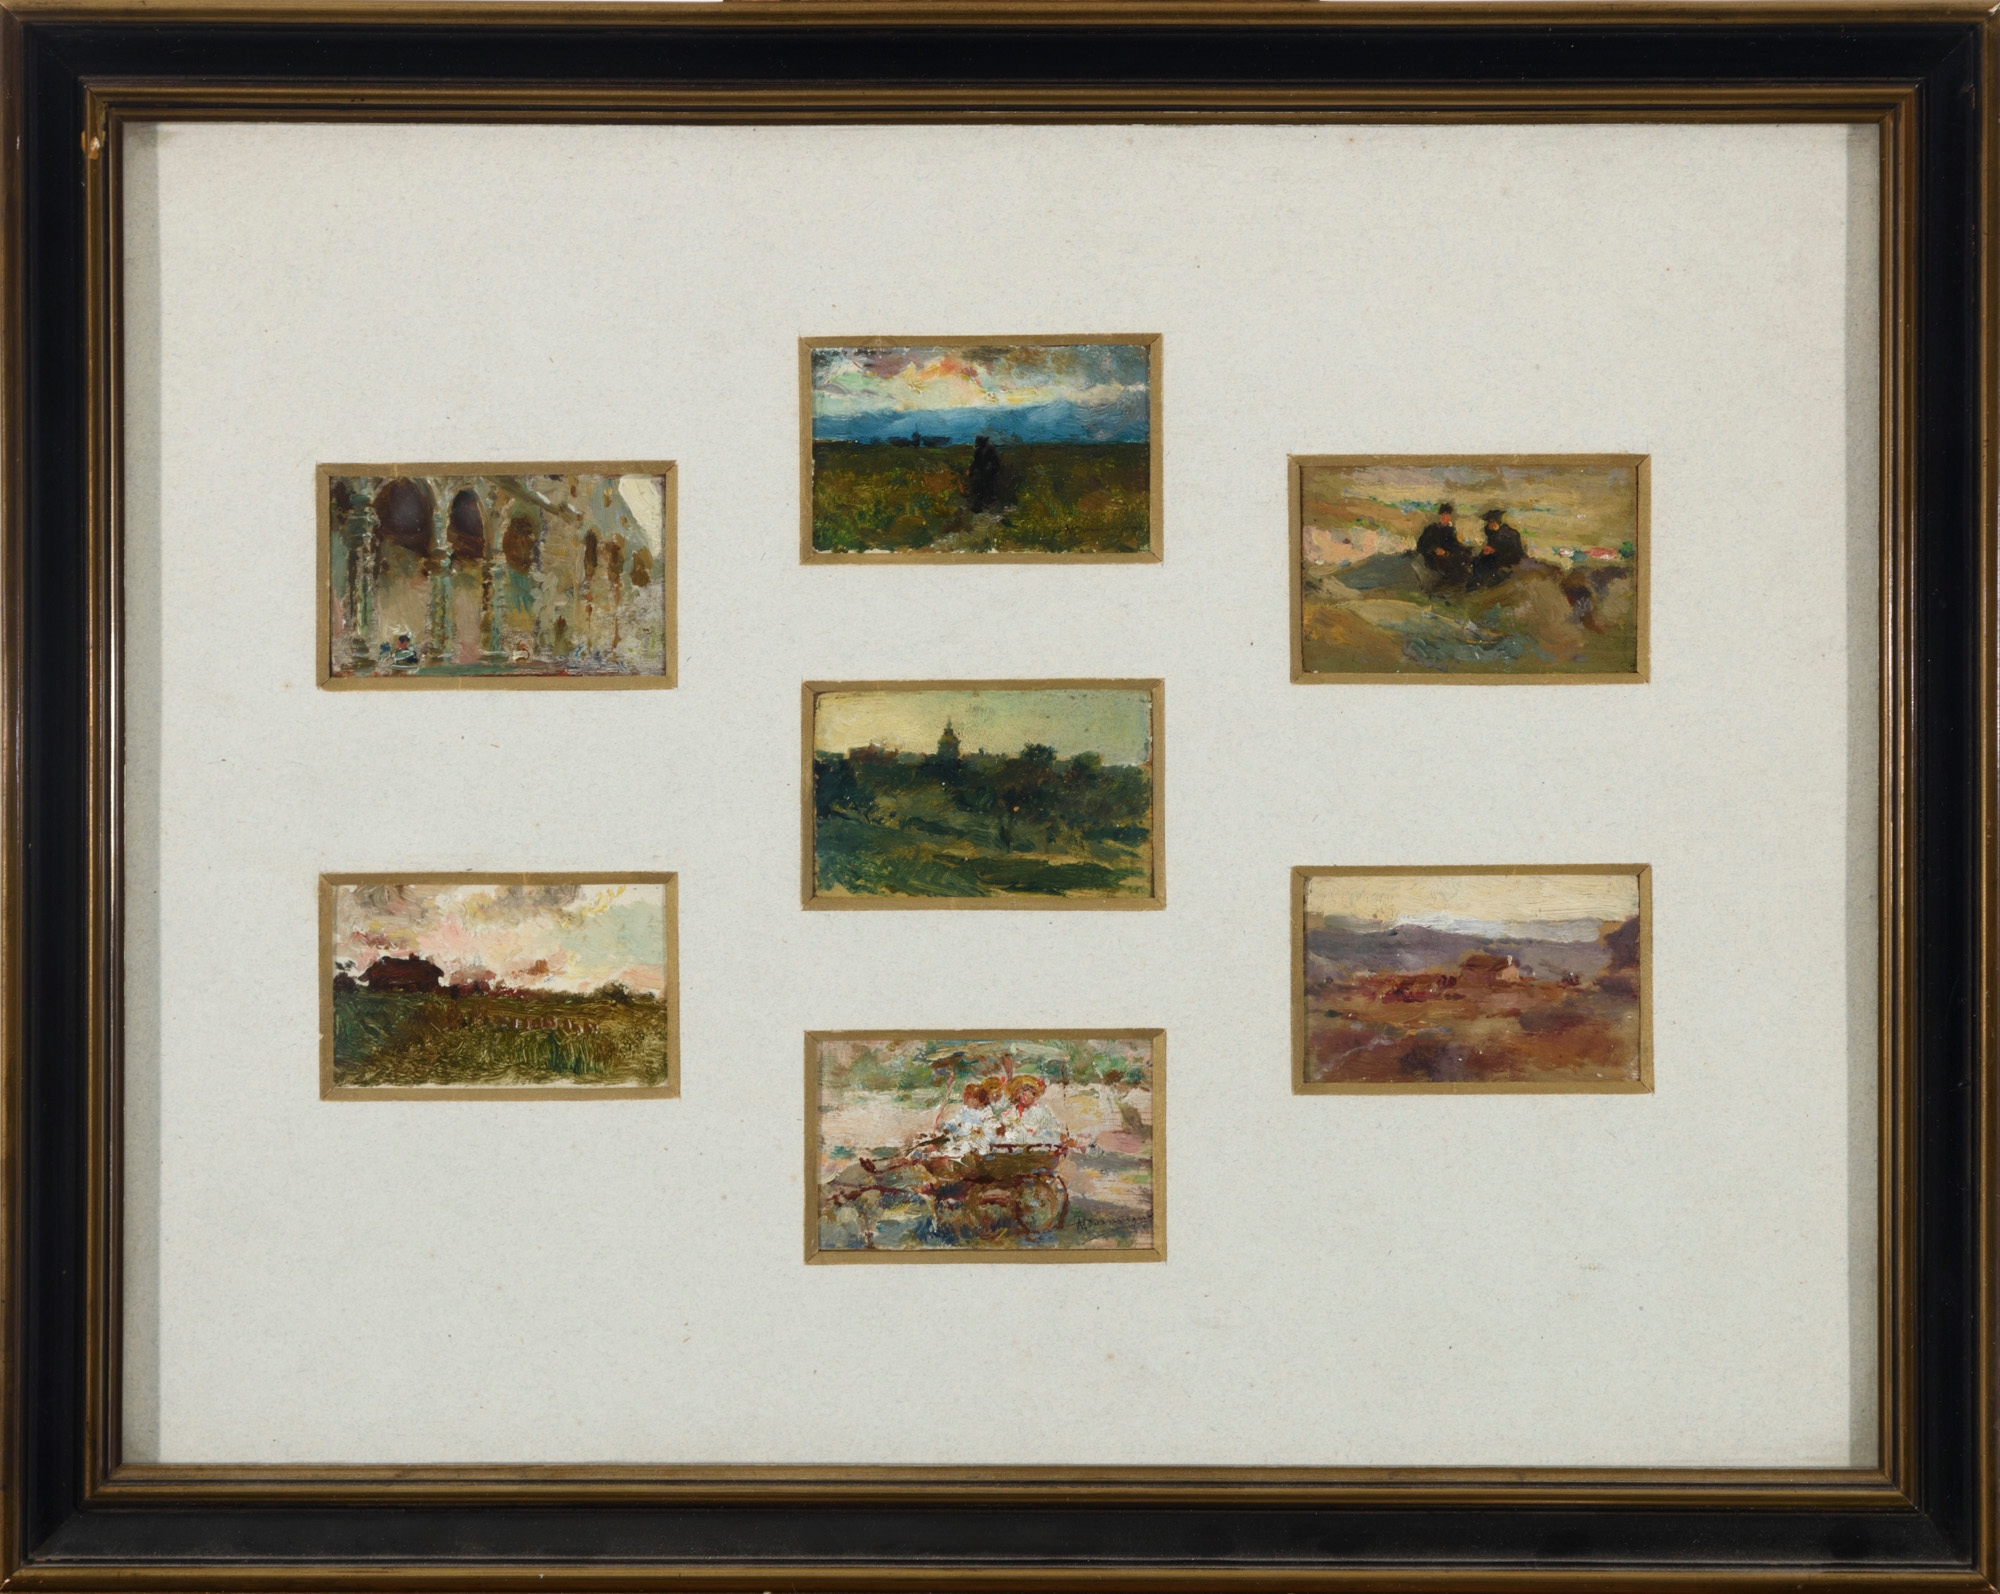 Seven works under the same frame: Paisajes by Manuel Domínguez Sánchez